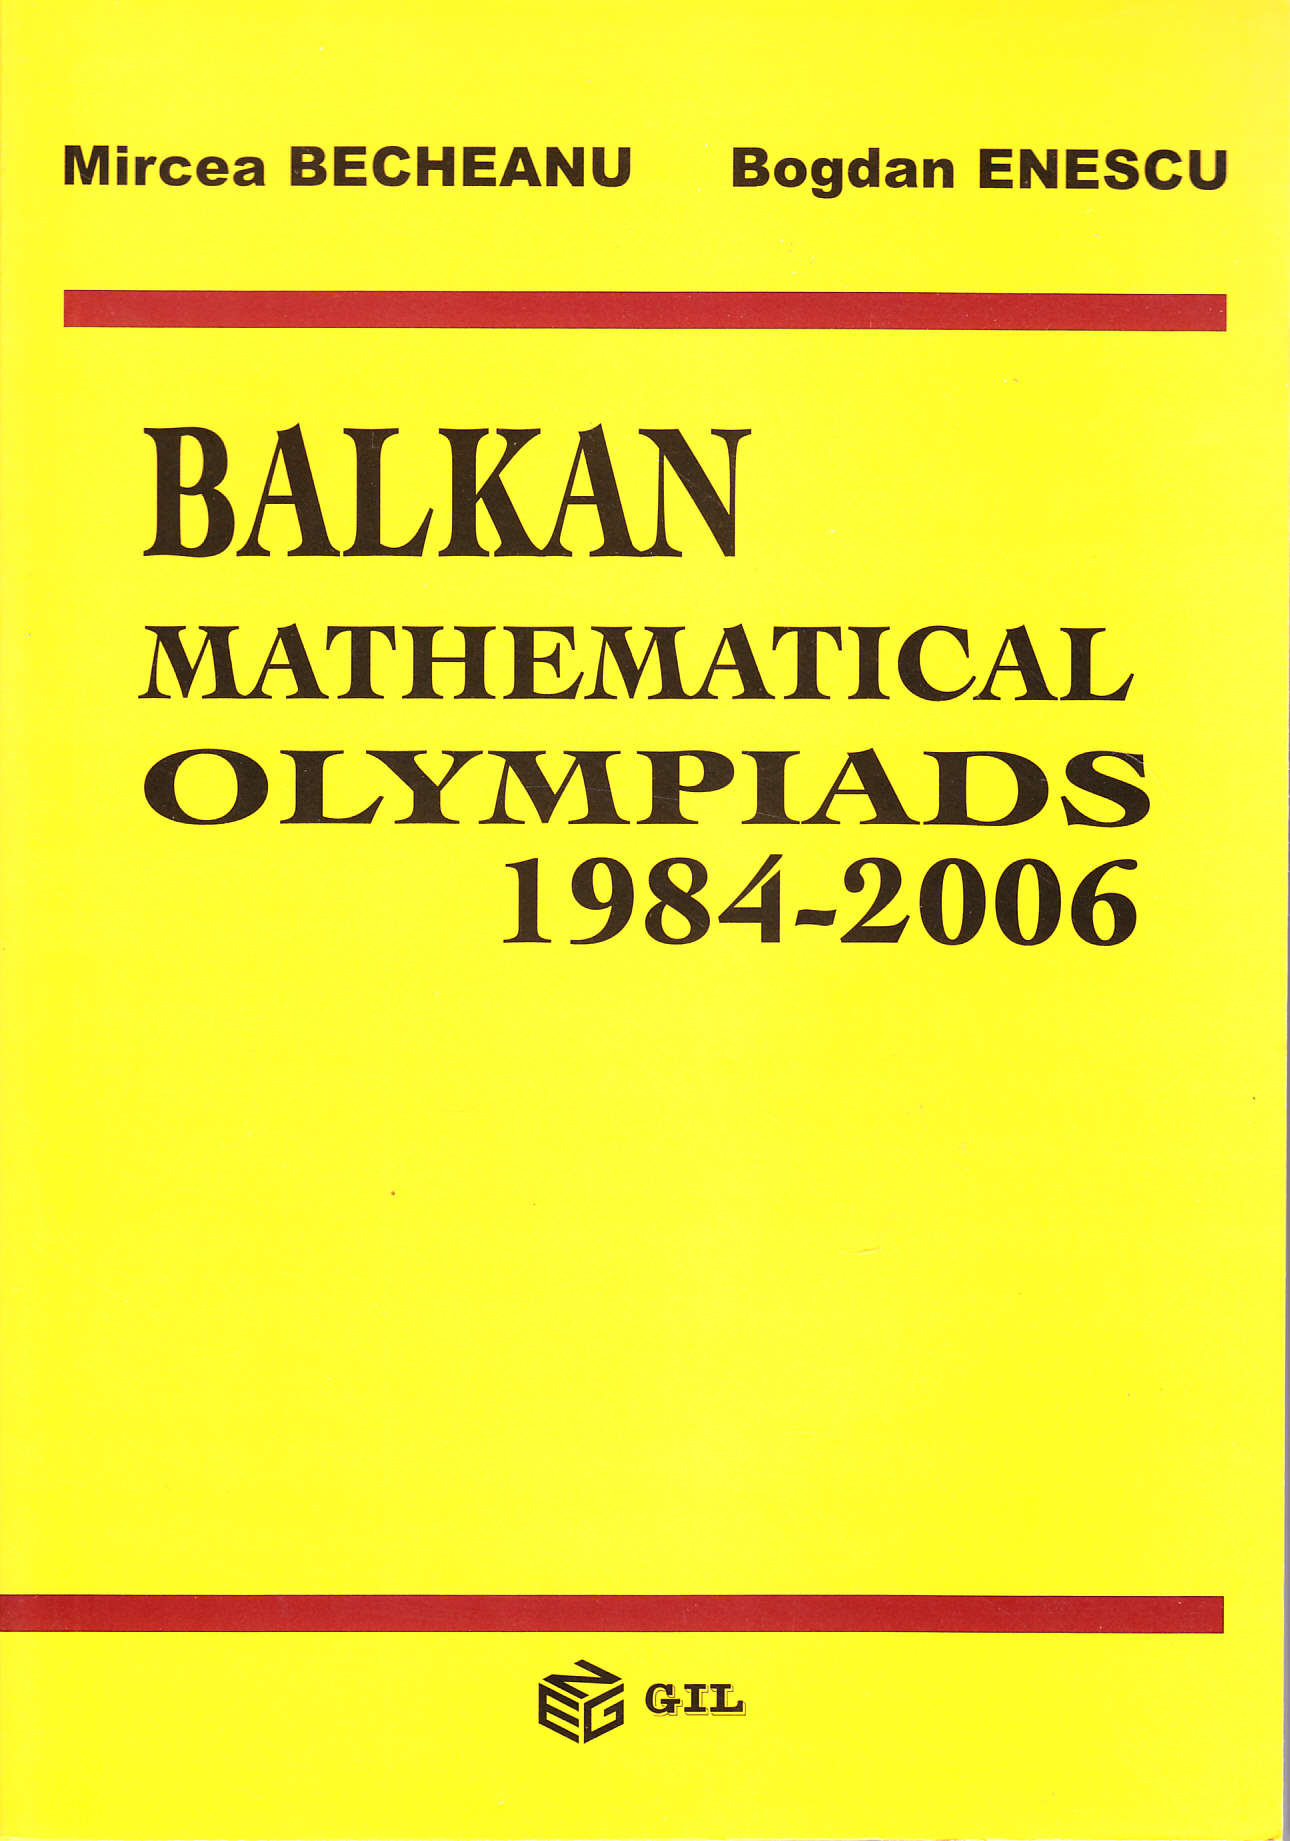 Balkan mathematical olympiads 1984-2006 - Mircea Becheanu, Bogdan Enescu